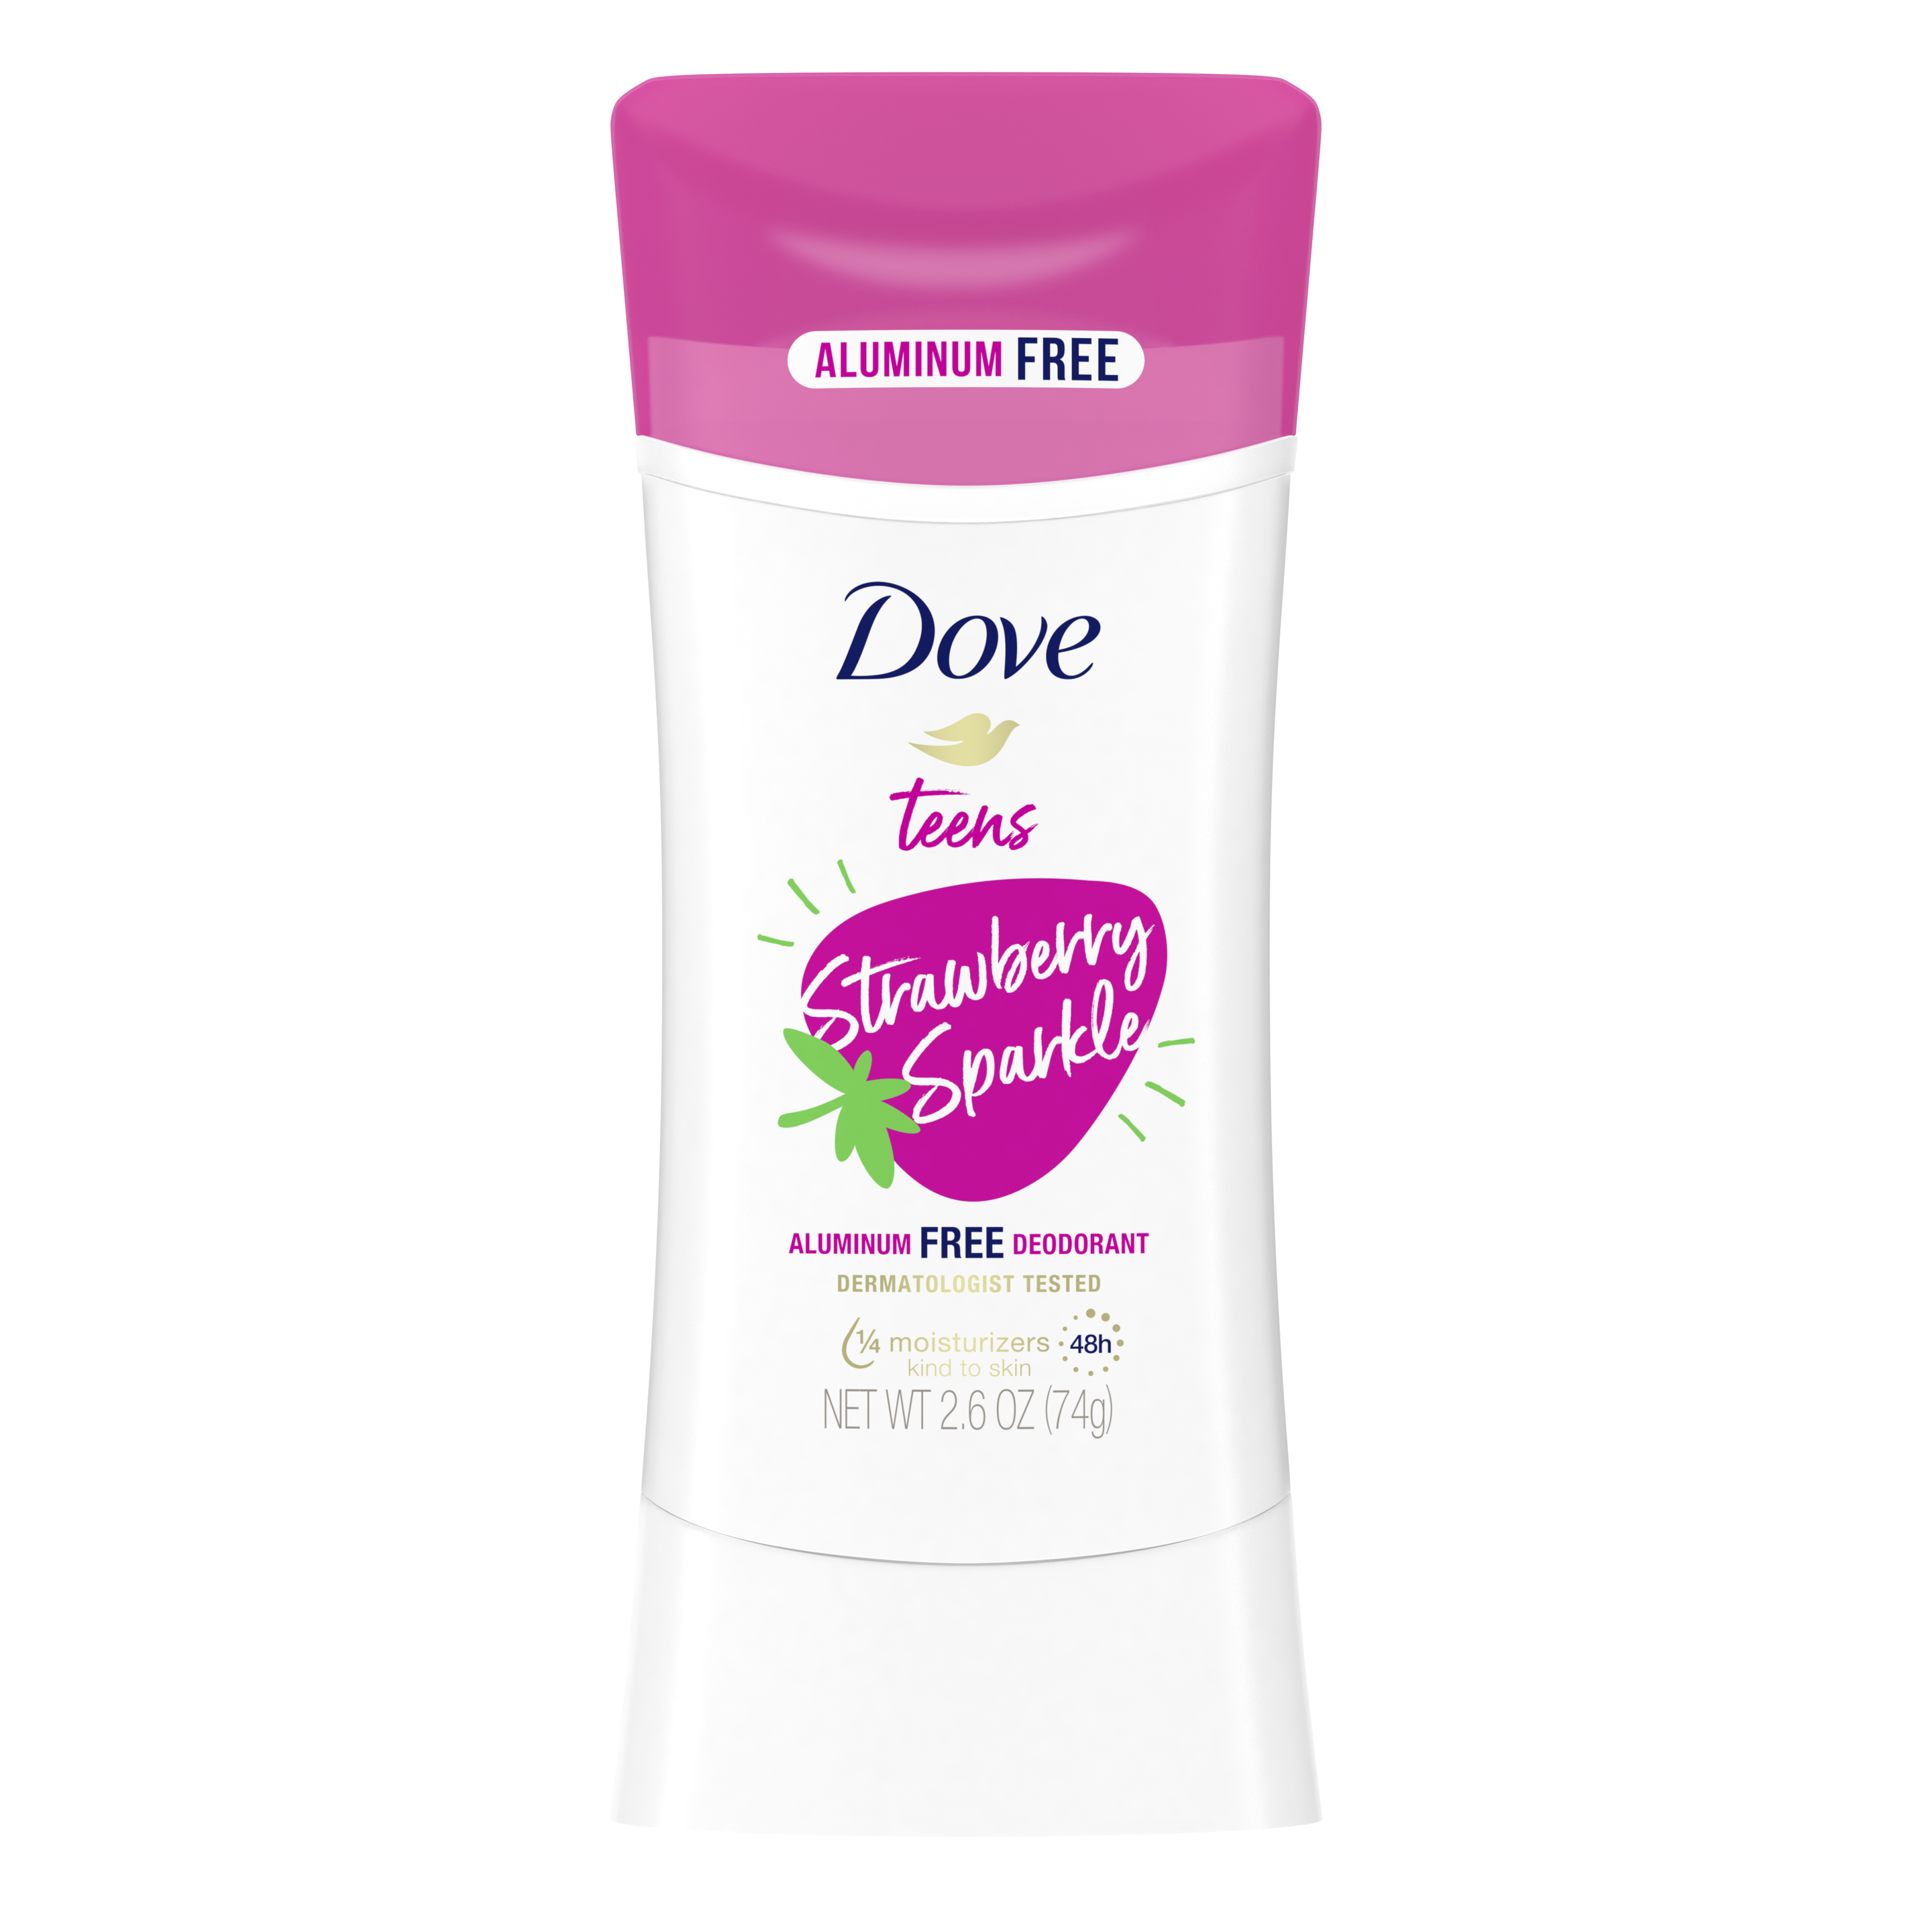 Dove Teens Aluminum-Free Deodorant Stick Strawberry